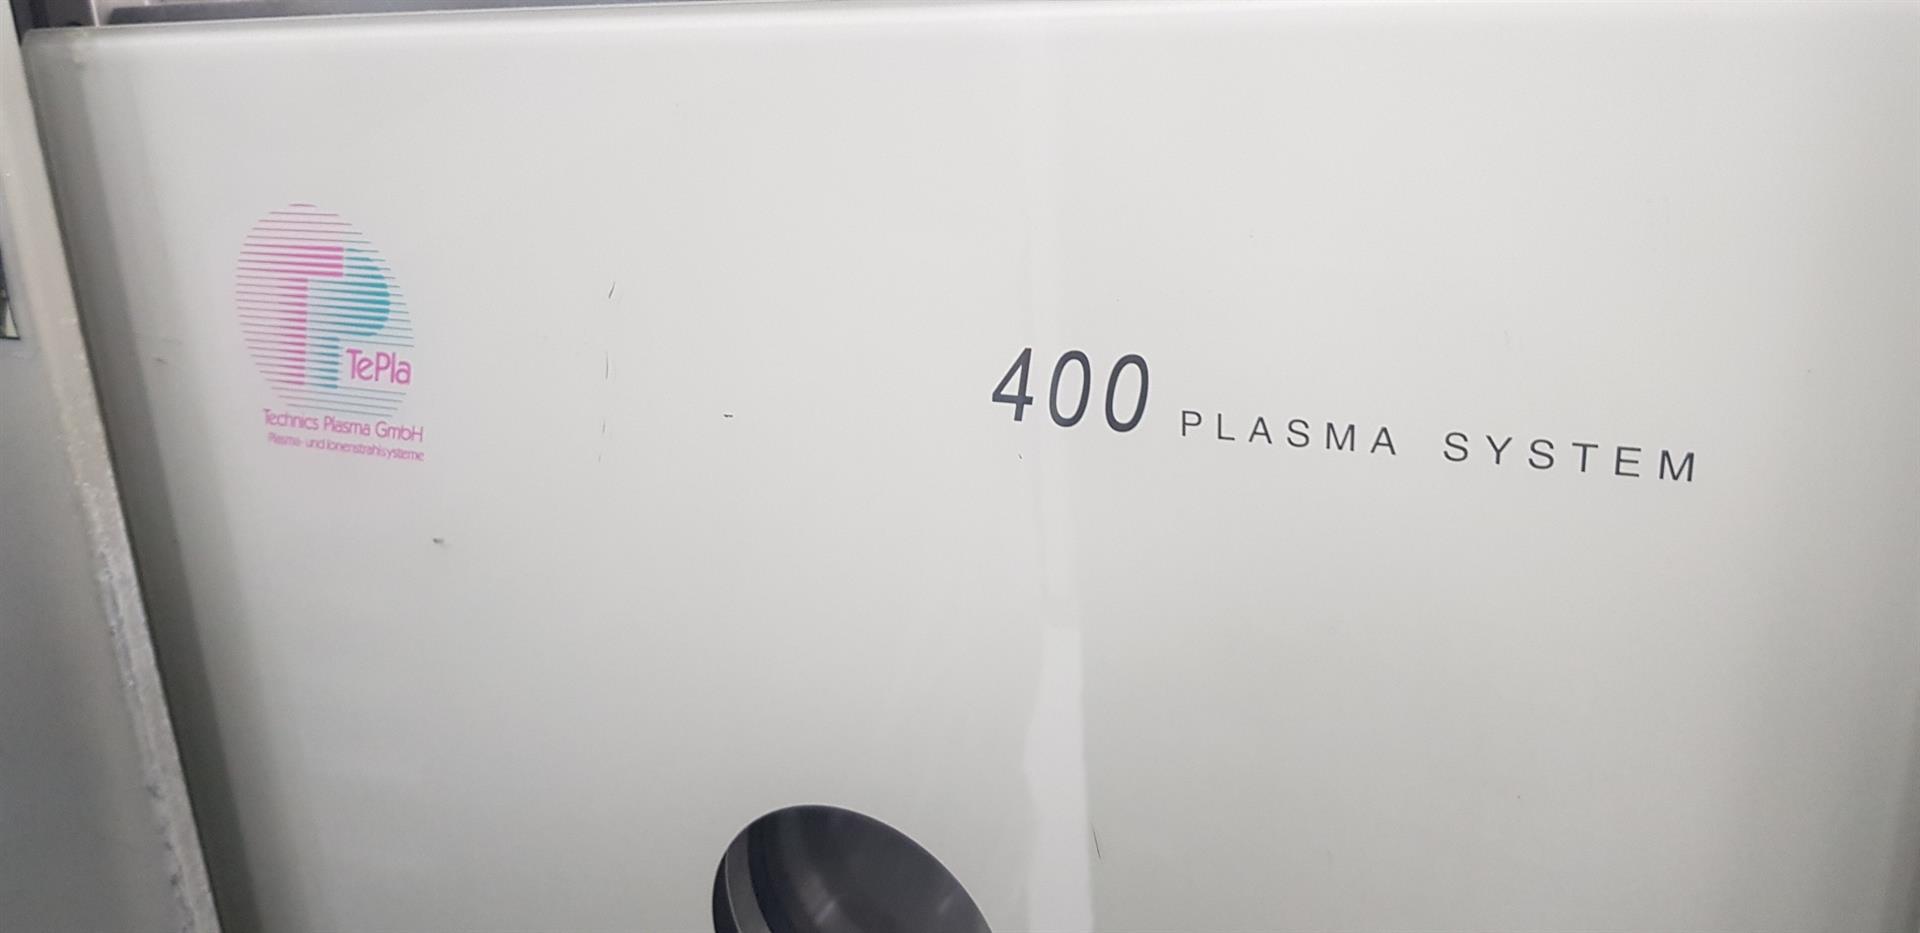 TePla 400 Plasma